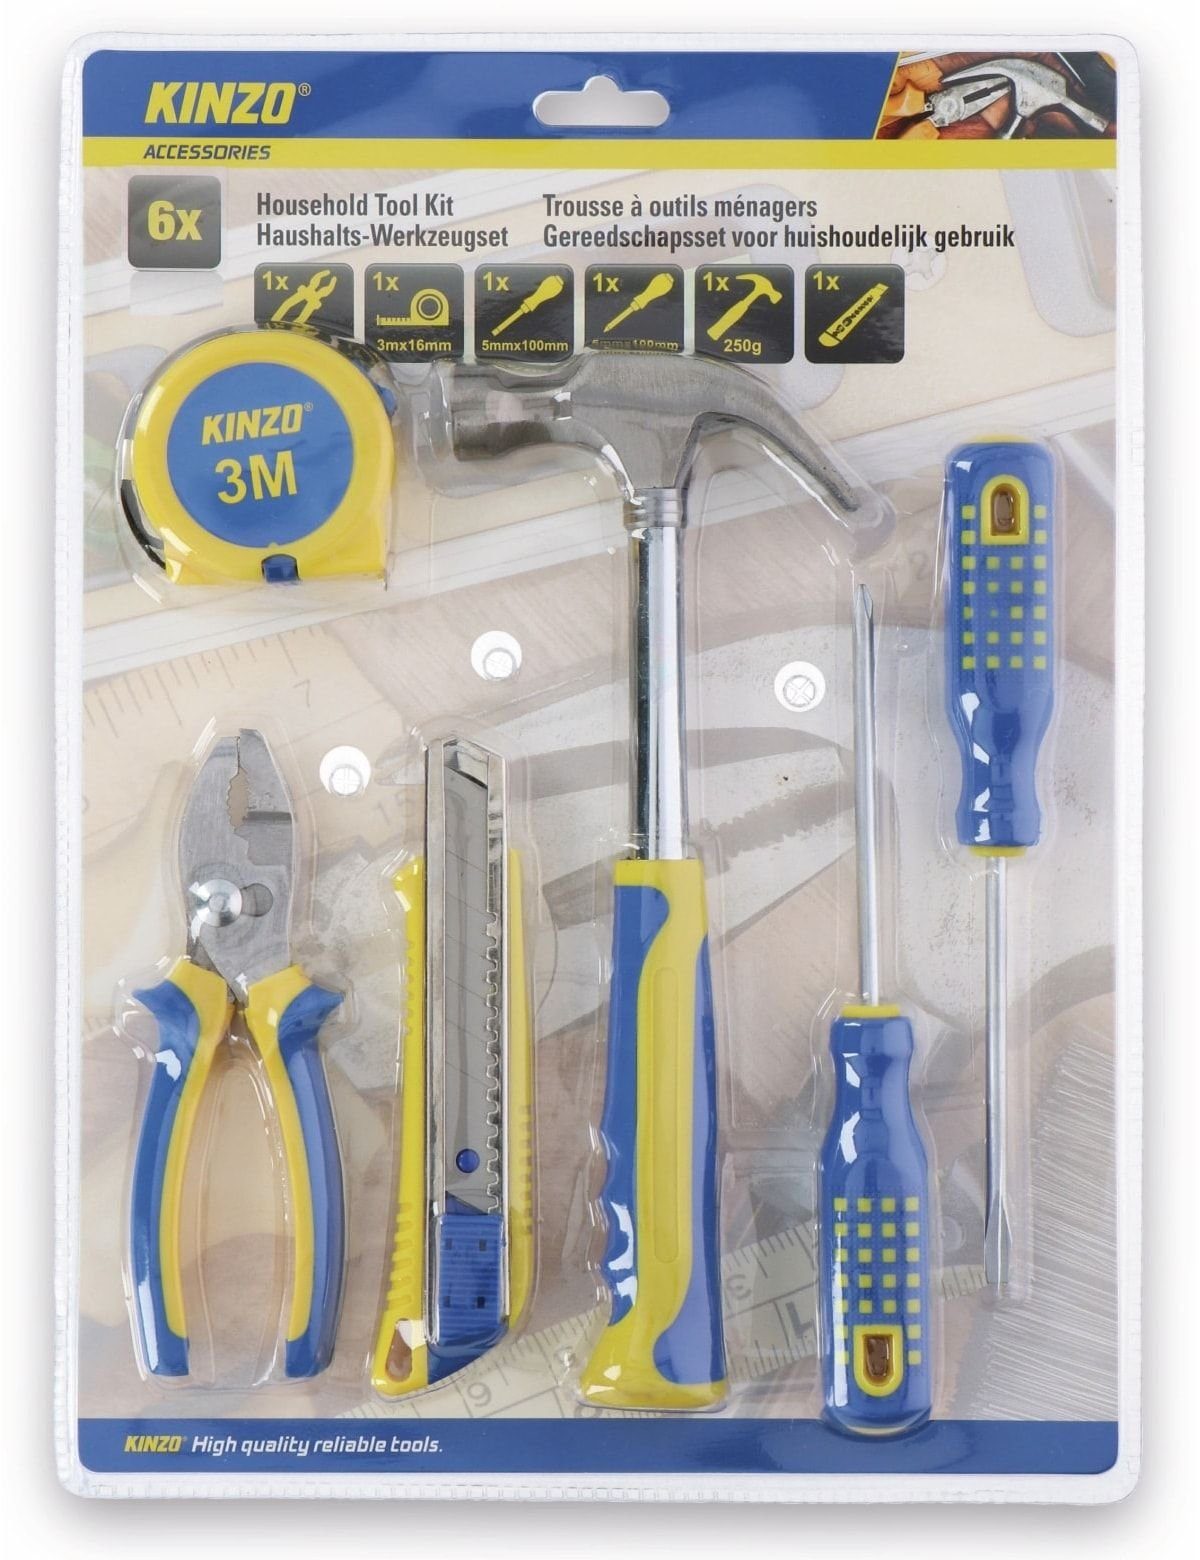 6teilig Haushaltswerkzeug-Set Kinzo gelb Werkzeugset blau, KINZO